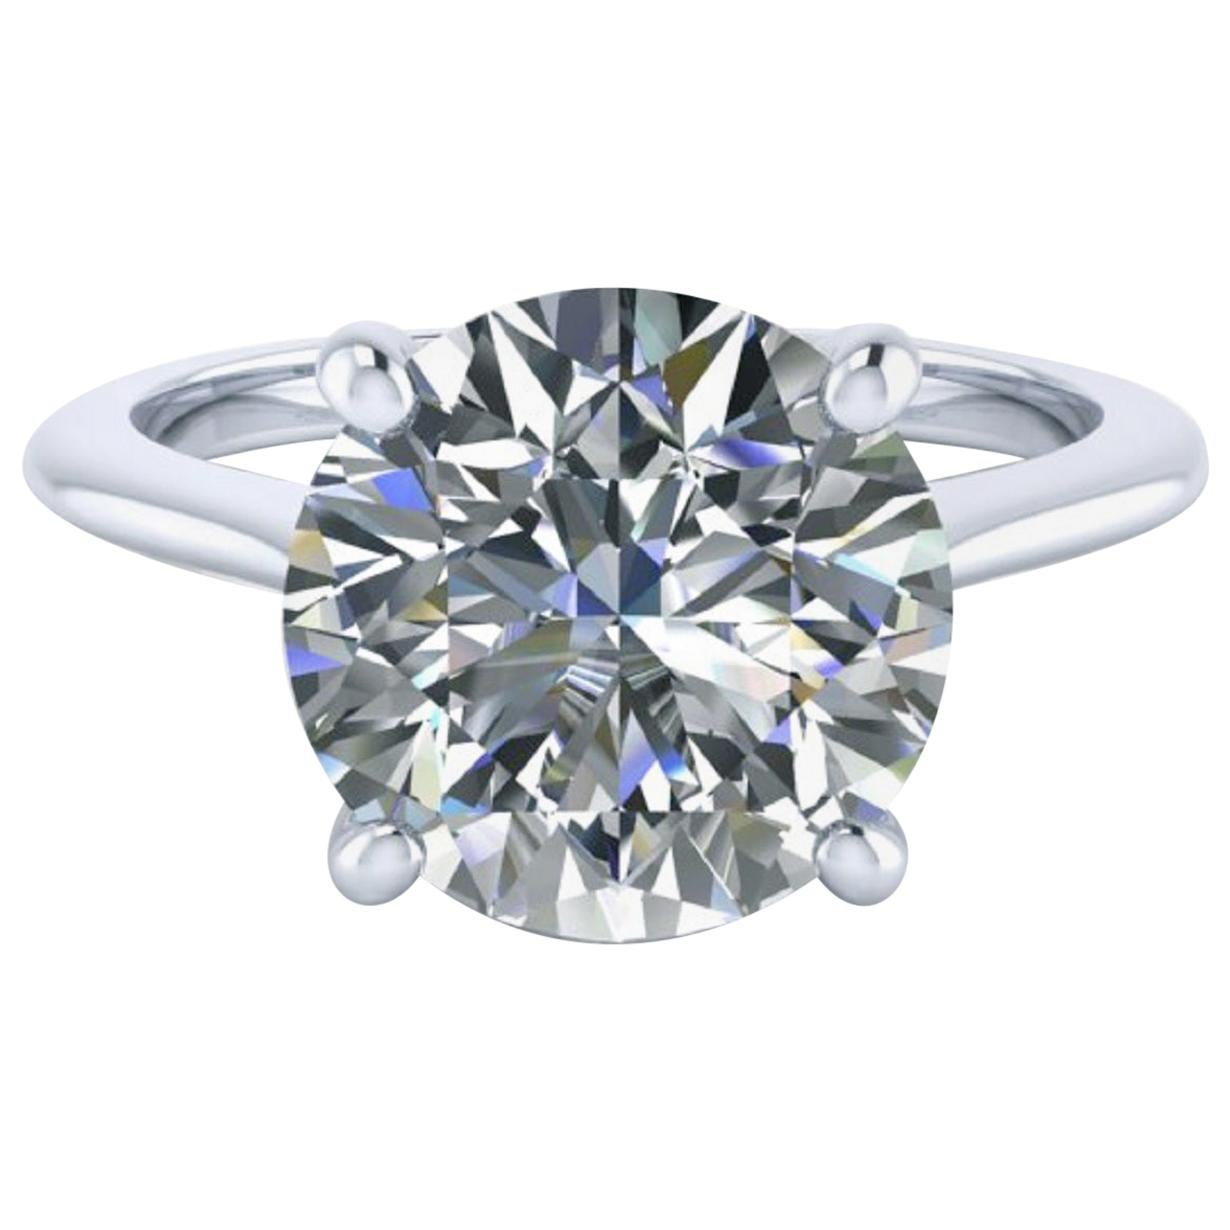 VVS Clarity 2.5 MM White Color Round Brilliant Cut Diamond 1-PCS Best Price Diamond | Engagement Ring Jewelry Diamond E-F Color